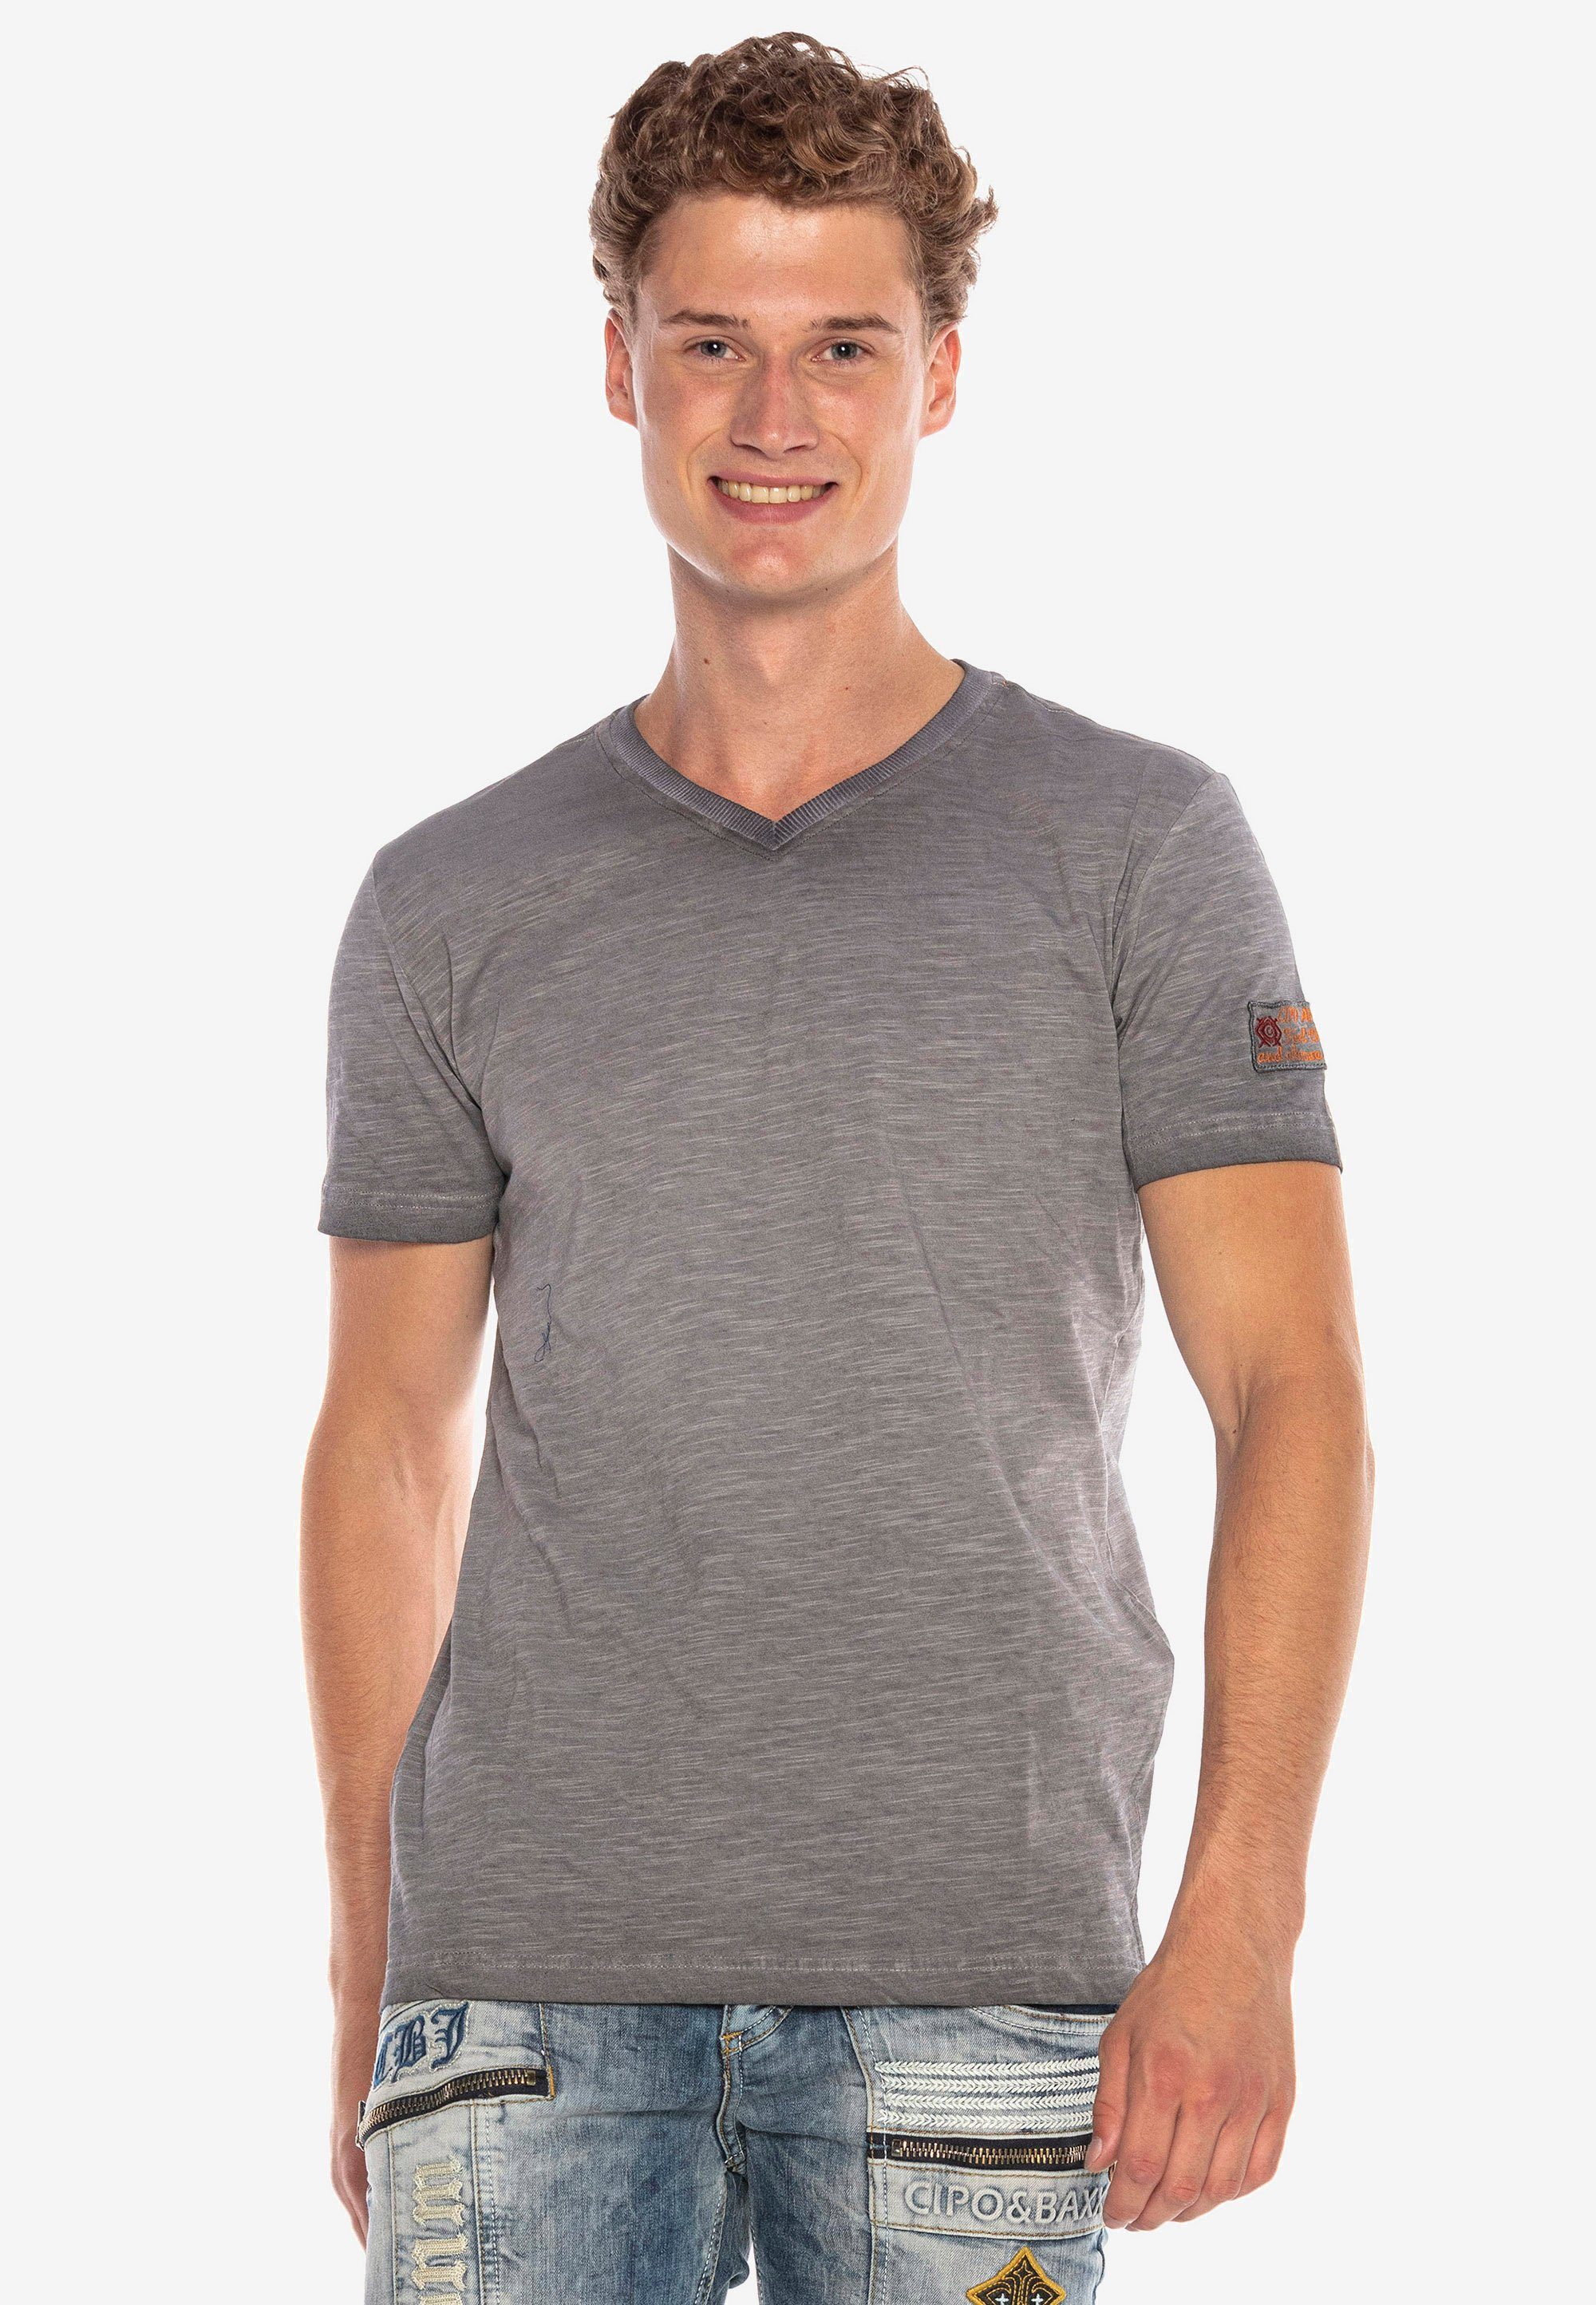 Cipo & Baxx T-Shirt mit kleinem Logo-Patch anthrazit | V-Shirts